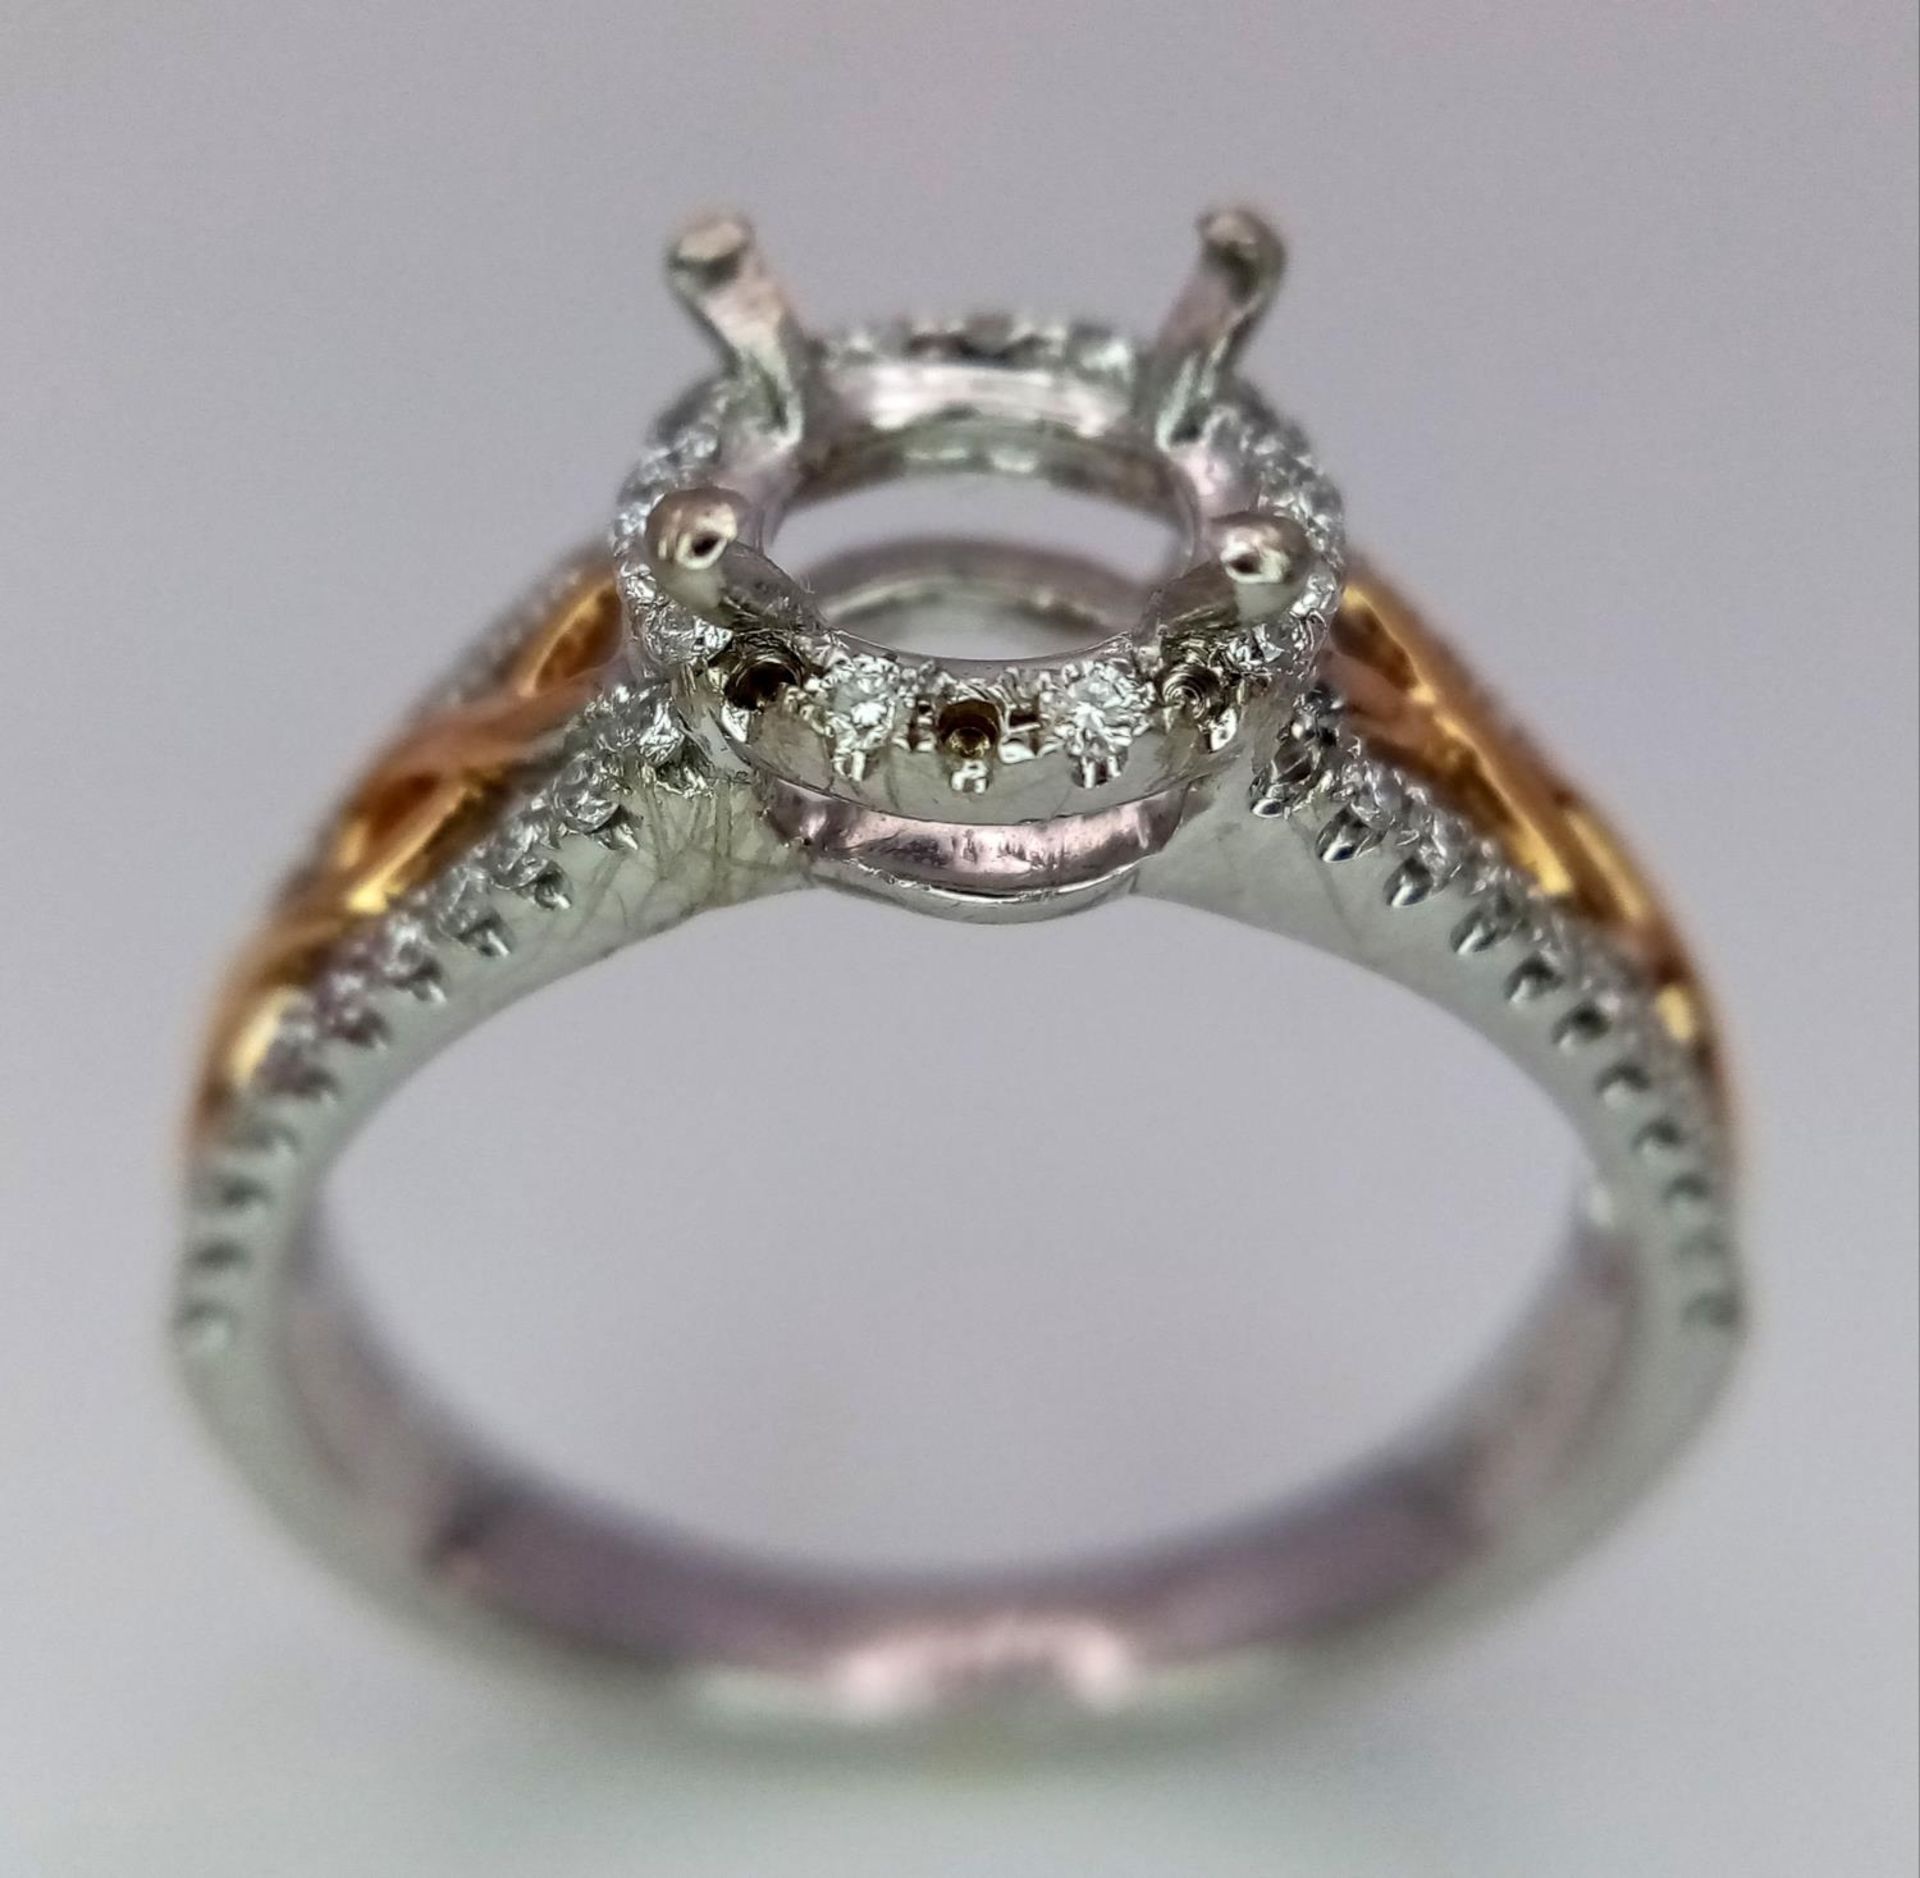 A 18K TWO GOLD TONE DIAMOND SET HALO RING WITH DIAMOND SPLIT SHOULDERS. 0.26CT DIAMONDS. READY TO - Image 2 of 8